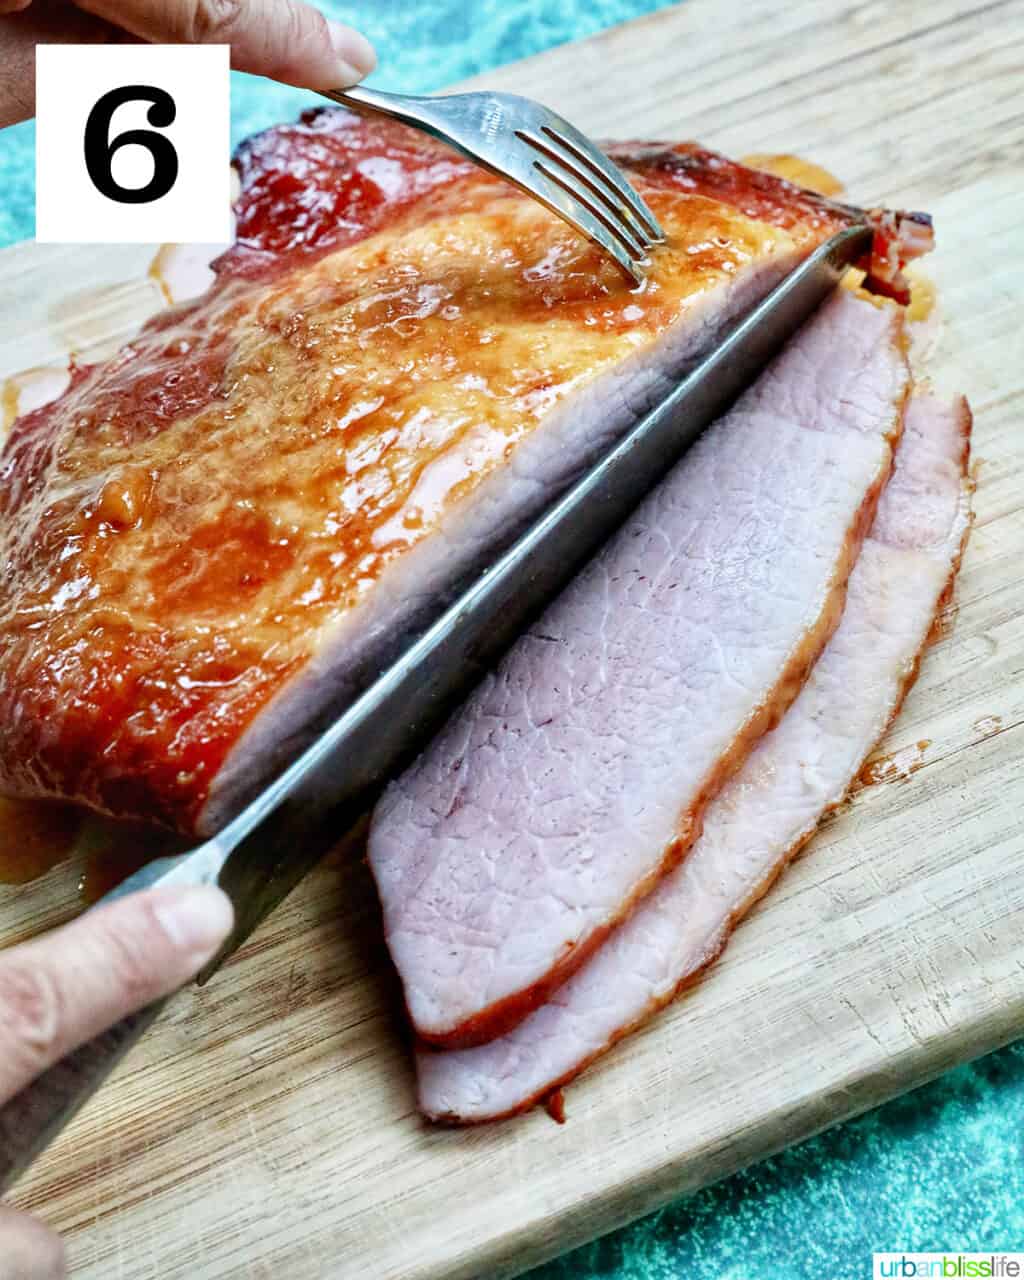 hand with knife slicing glazed ham on a cutting board.